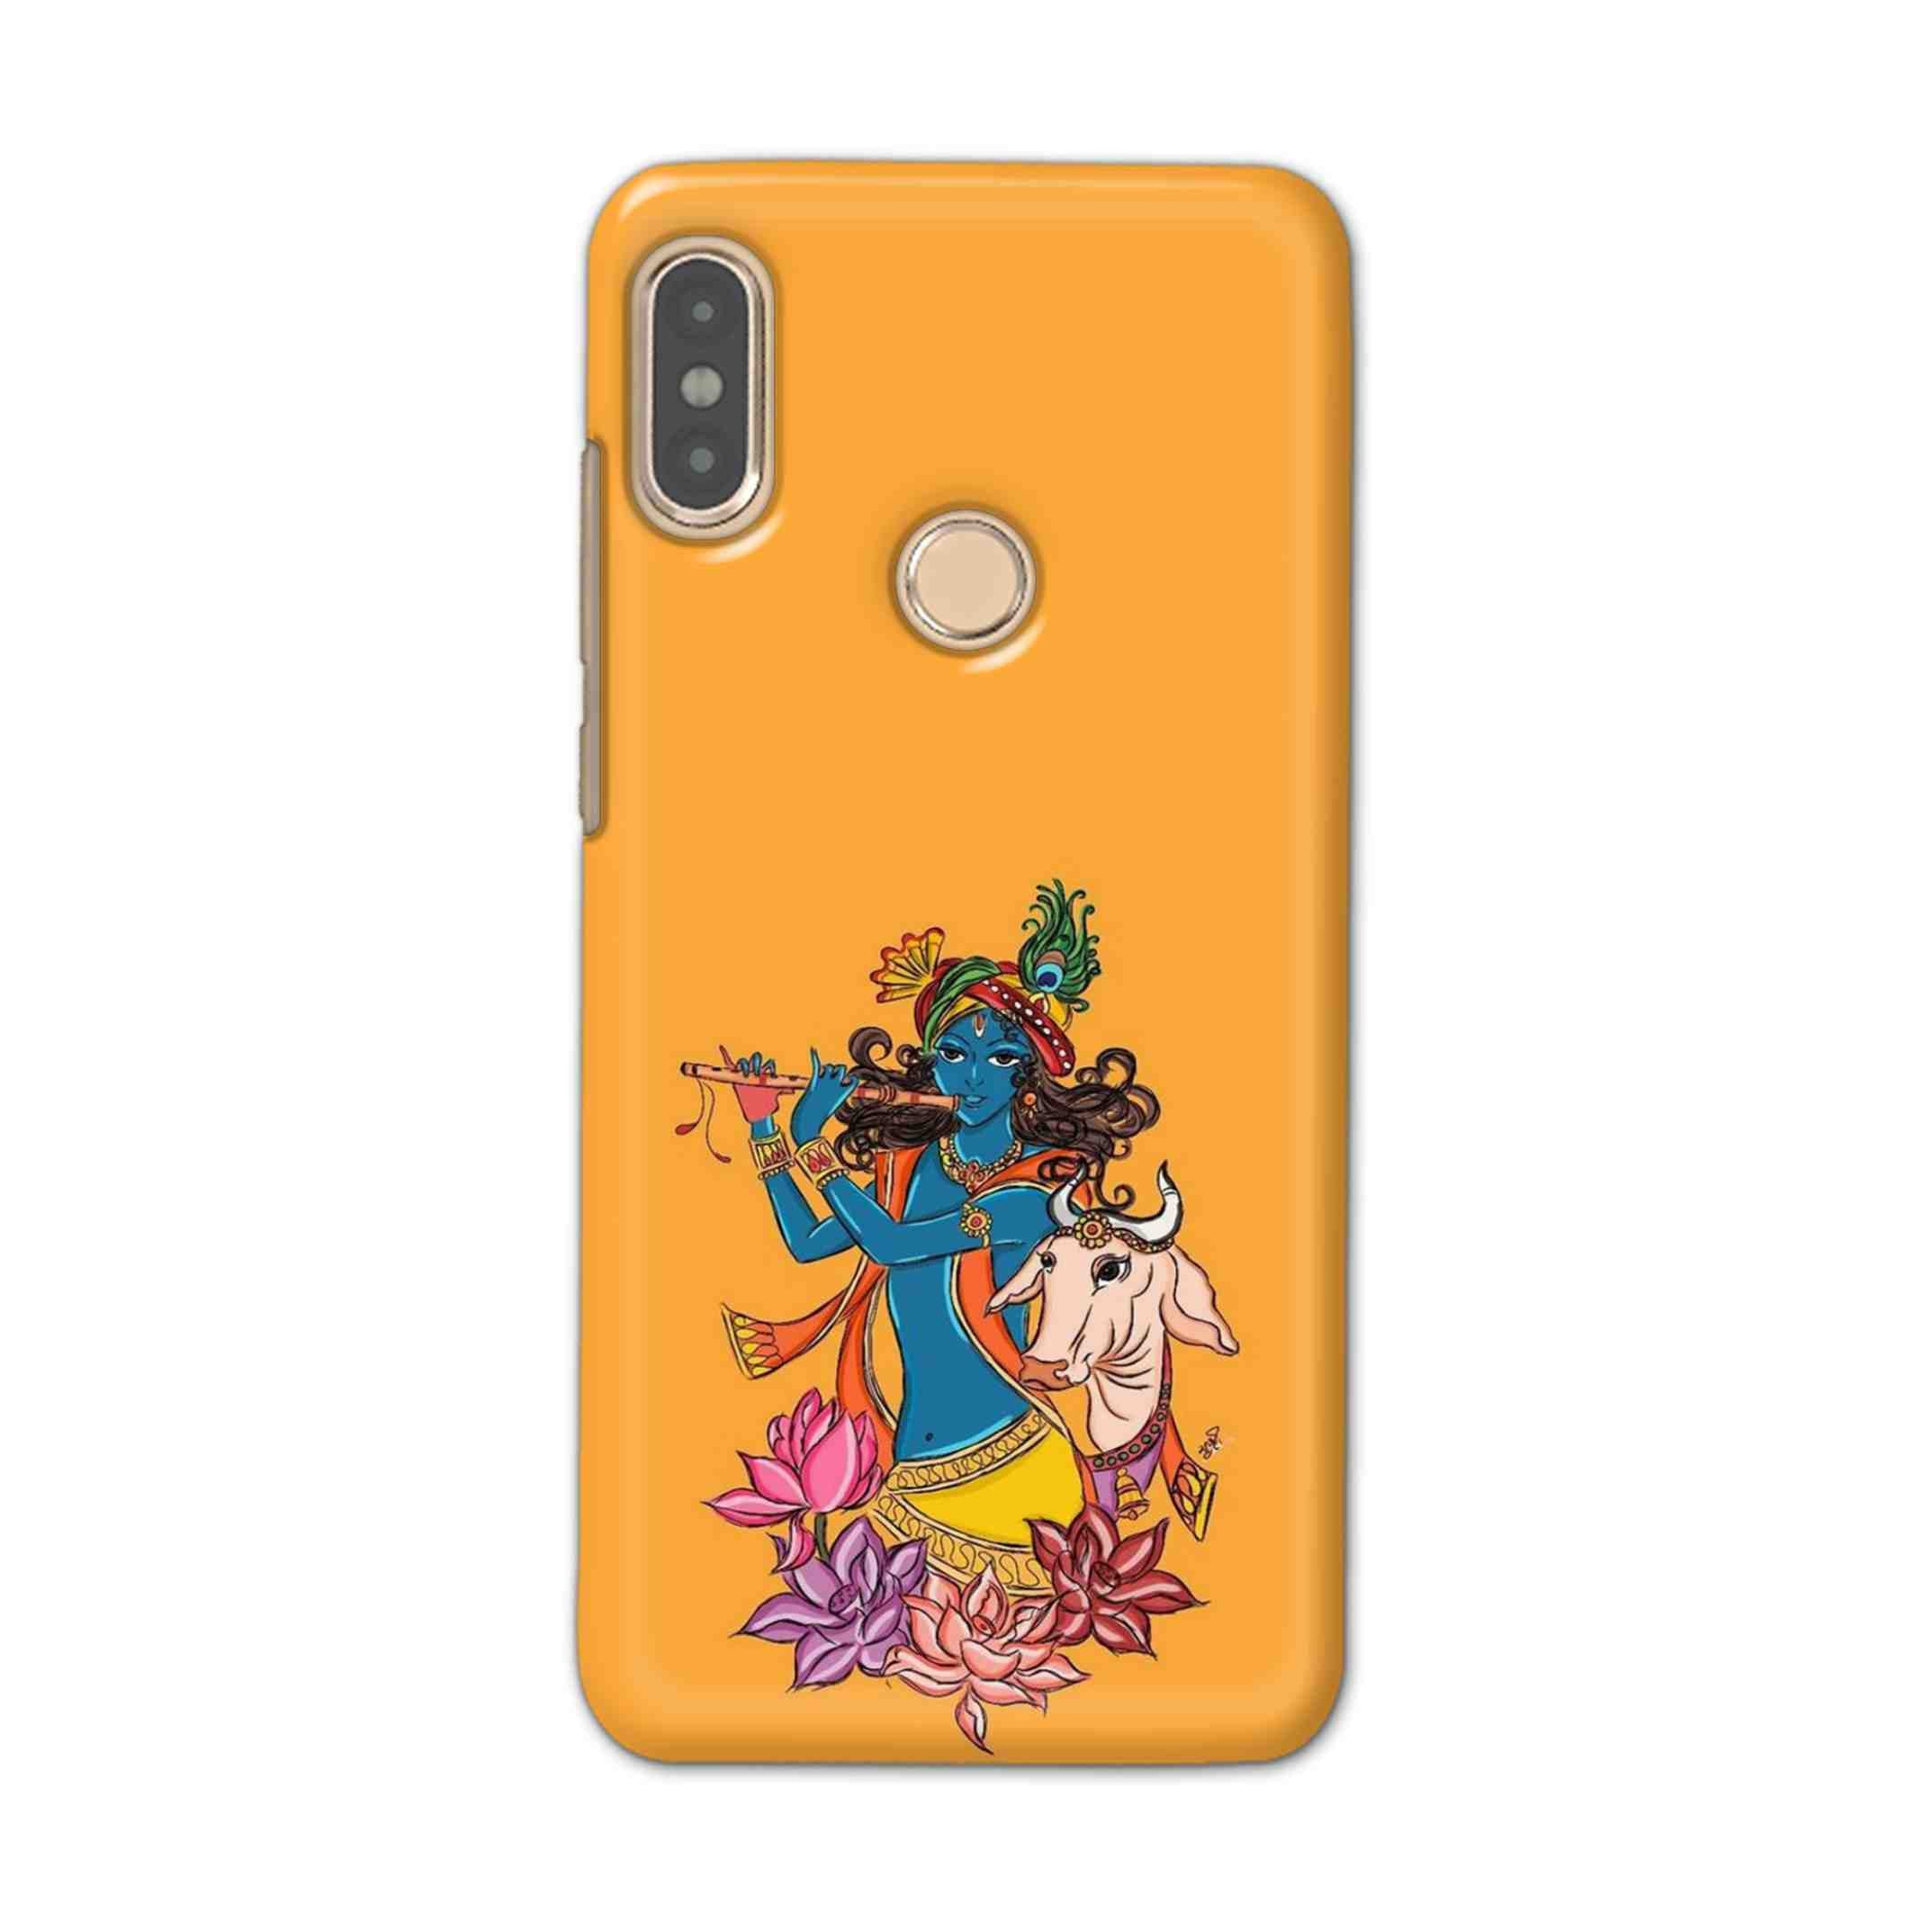 Buy Radhe Krishna Hard Back Mobile Phone Case Cover For Xiaomi Redmi Note 5 Pro Online